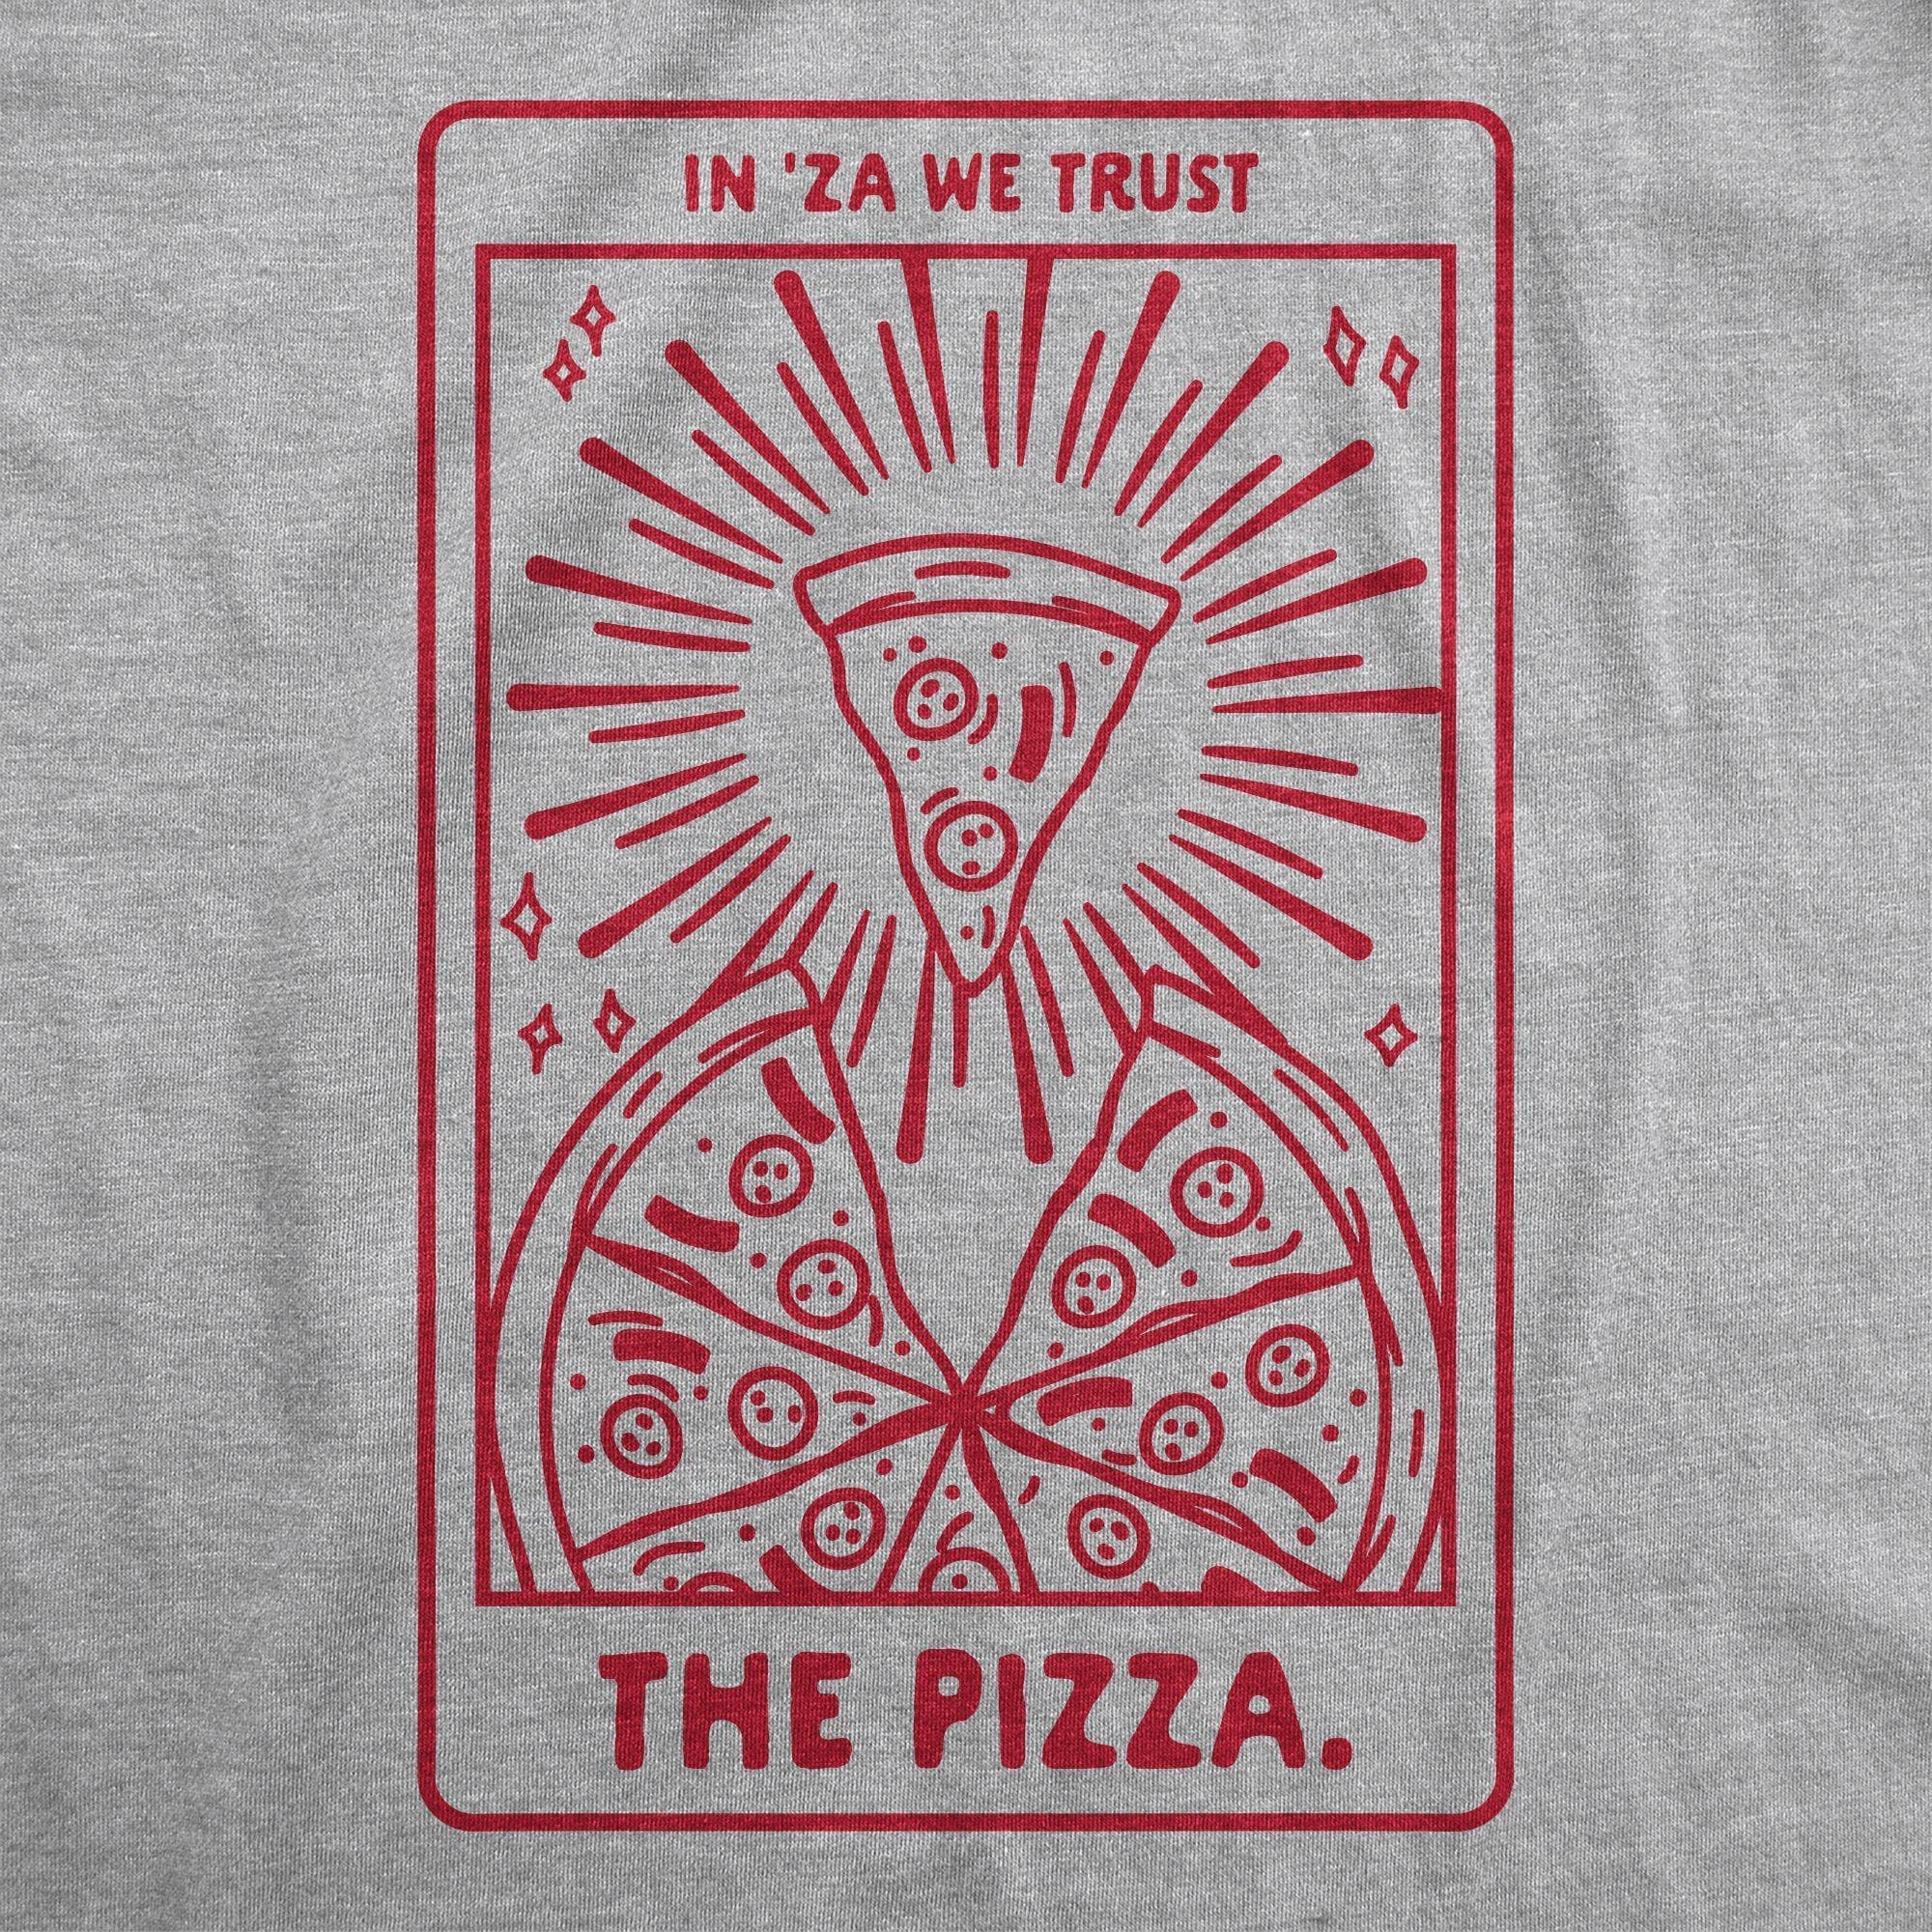 Pizza Tarot Card Men's Tshirt - Crazy Dog T-Shirts